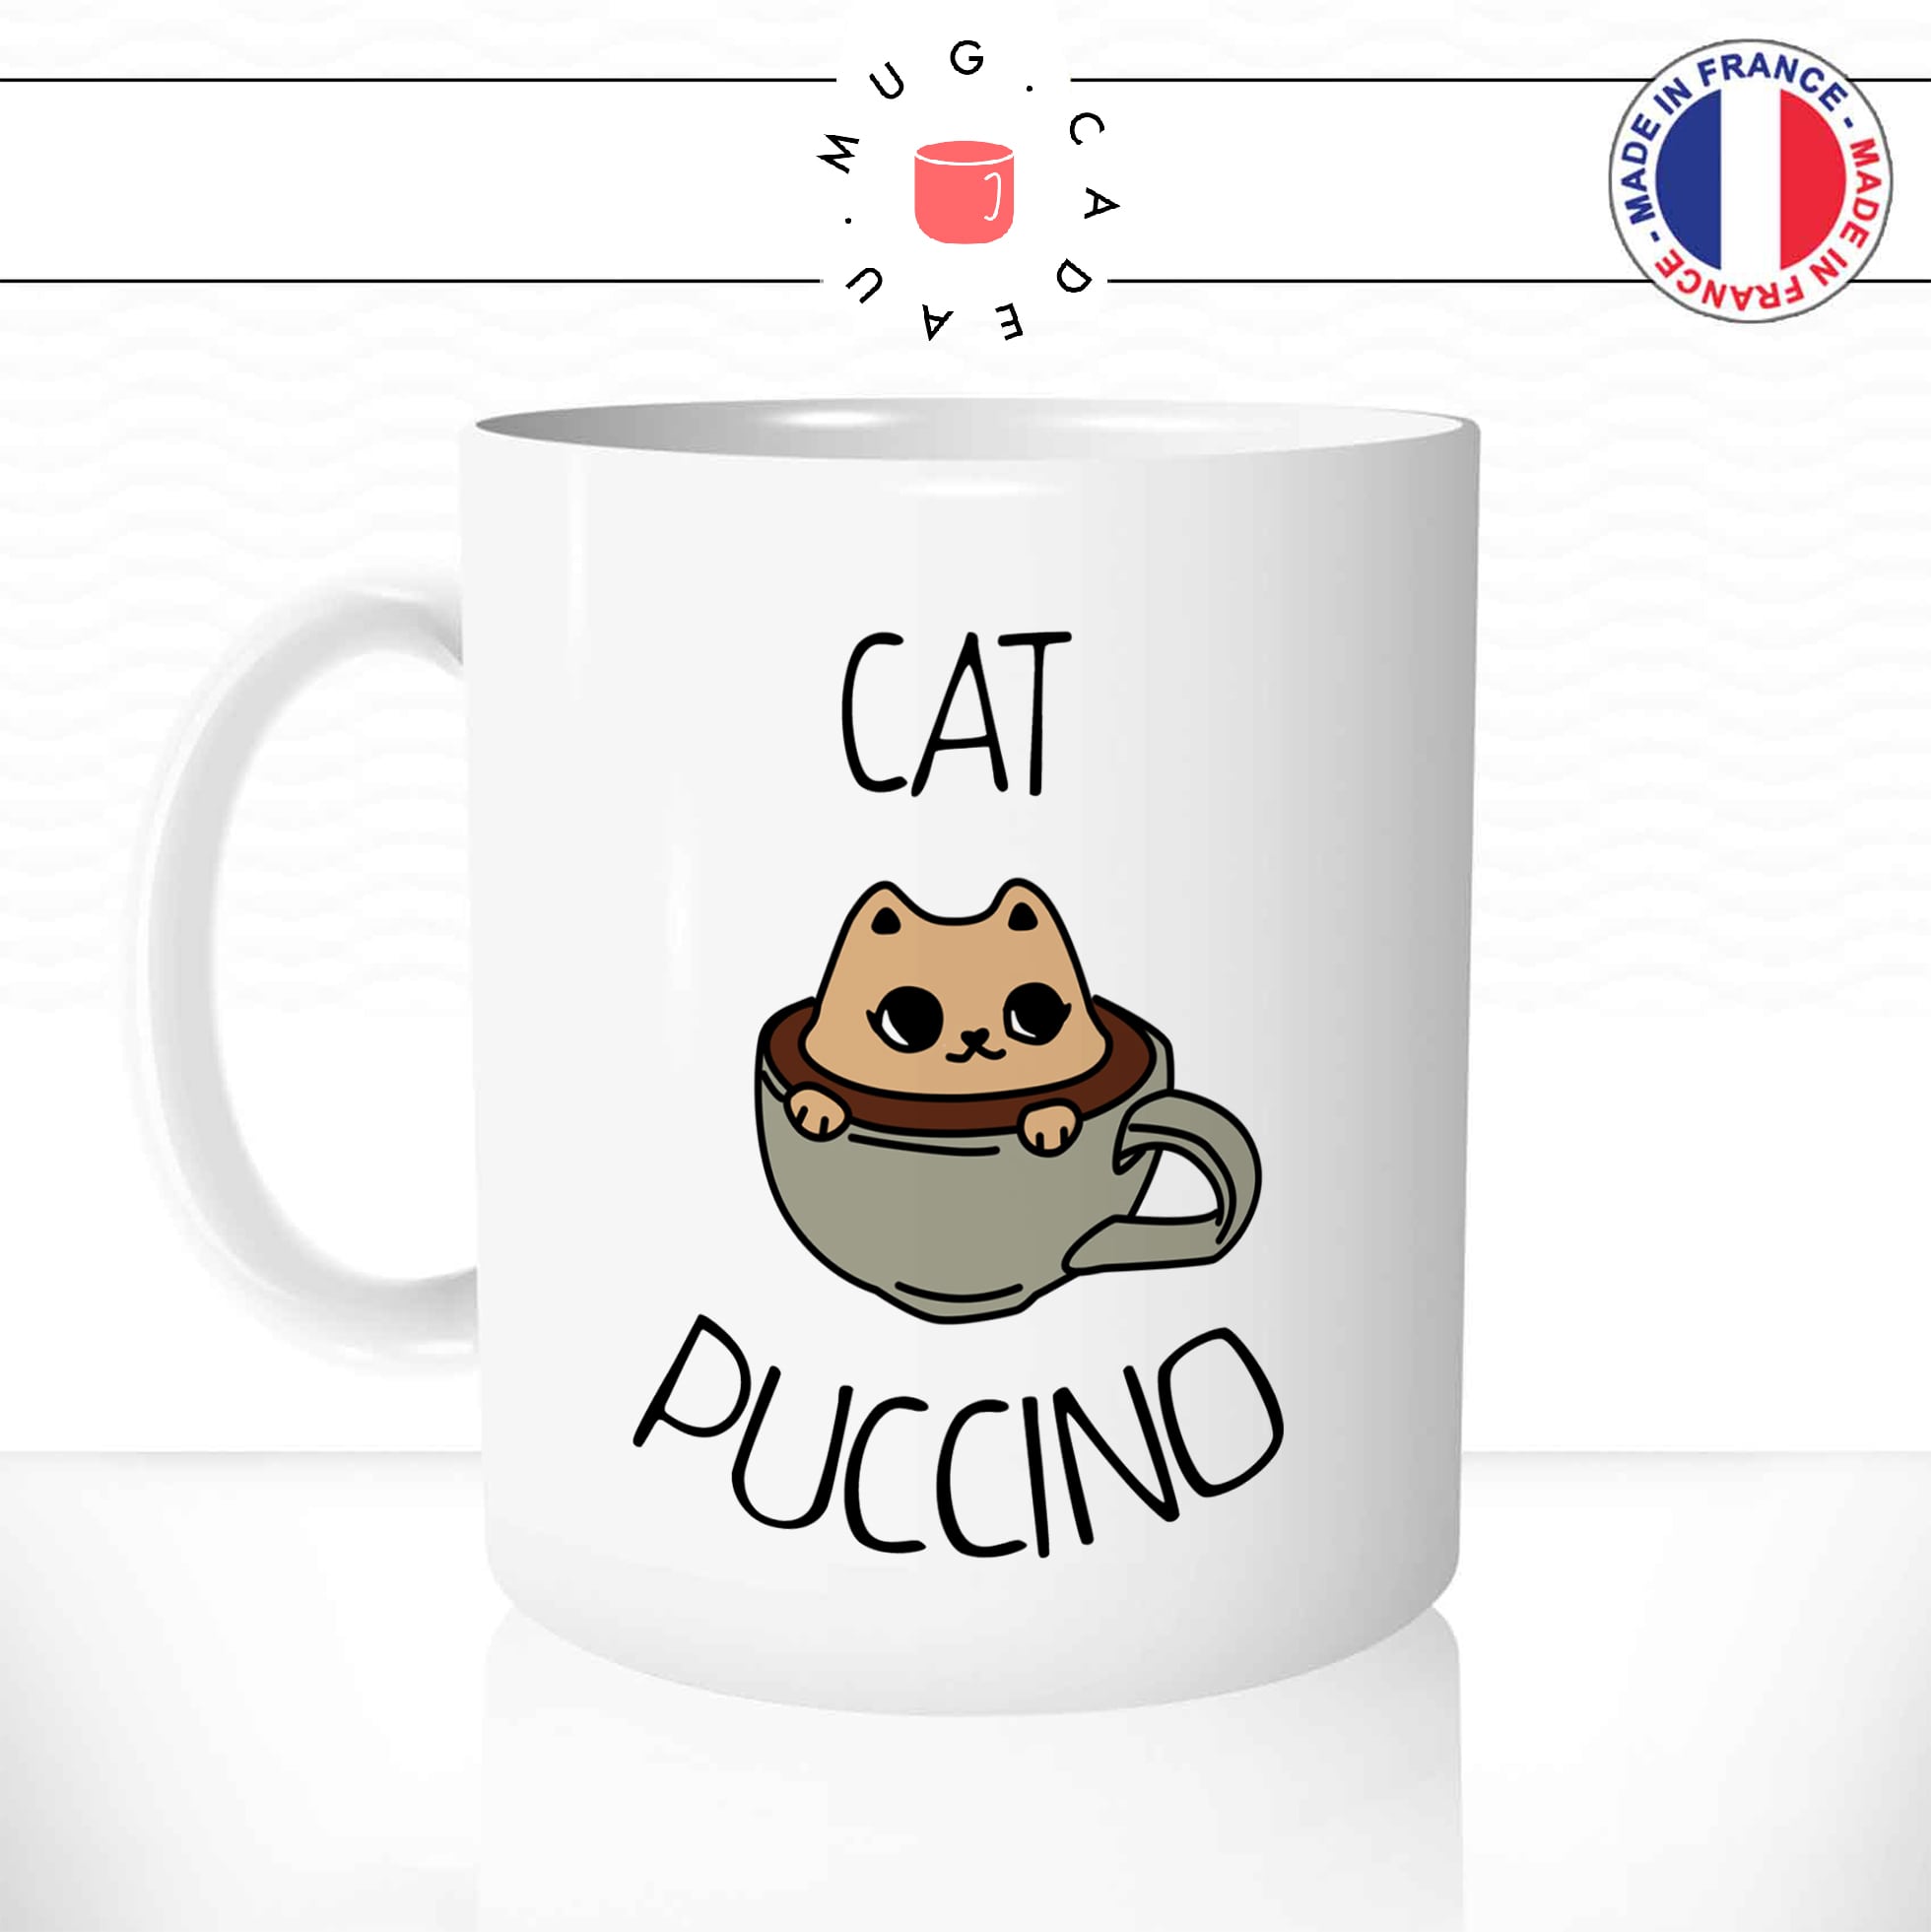 Mug Cat Puccino